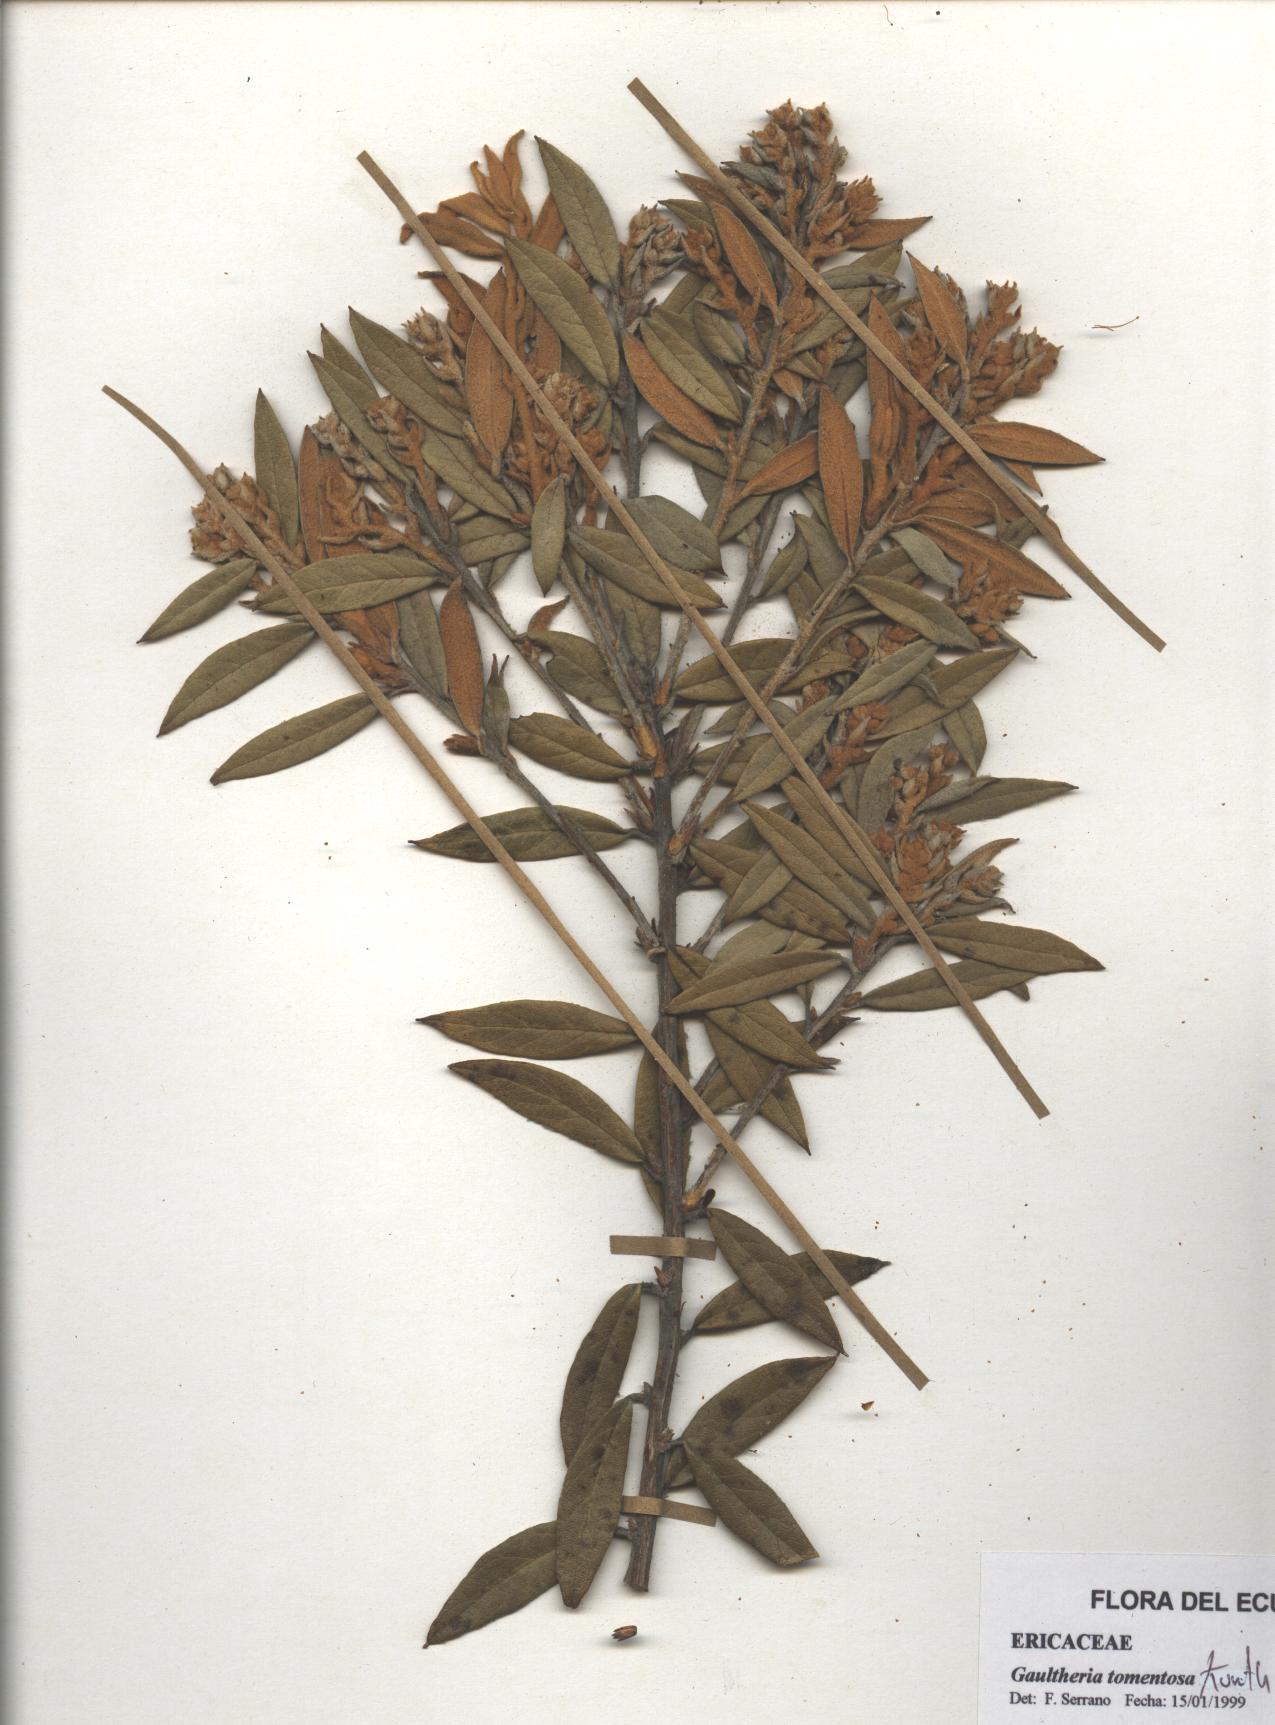 Gaultheria tomentosa Kunth